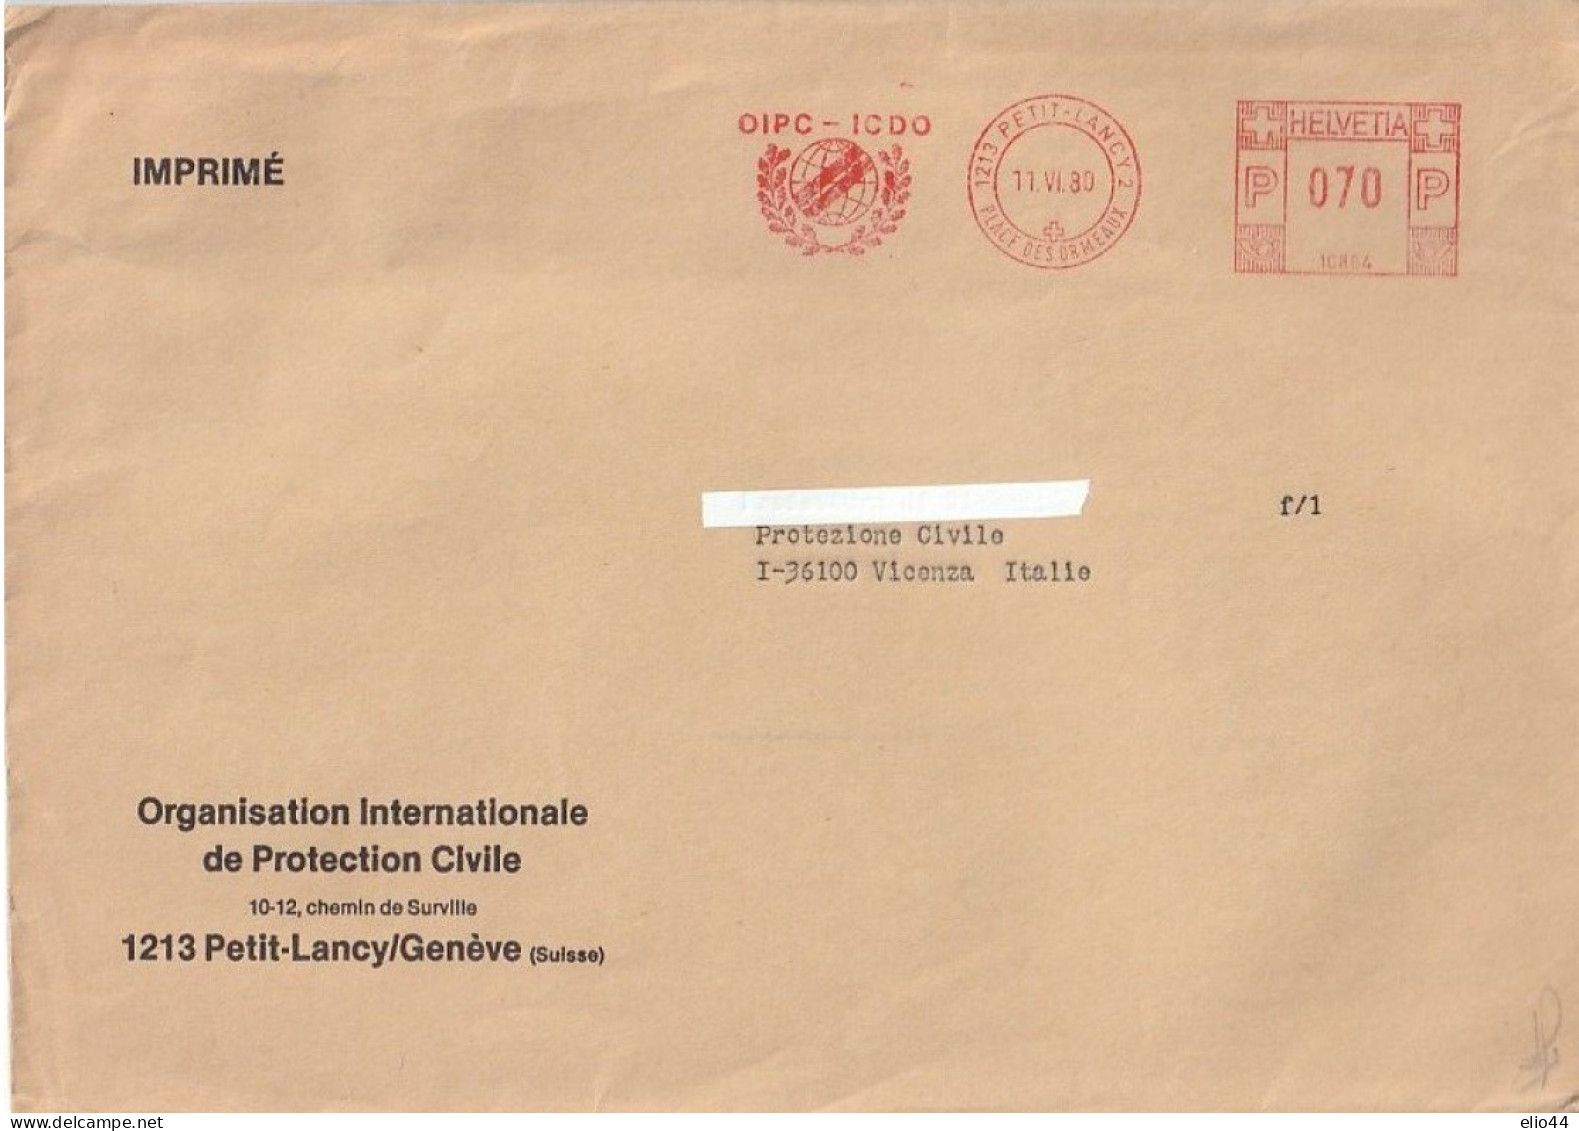 Affrancature Meccaniche Rosse (EMA) - Svizzera- Madrid 1980 - Organisation Internationale De Protection Civile - - Frankiermaschinen (FraMA)